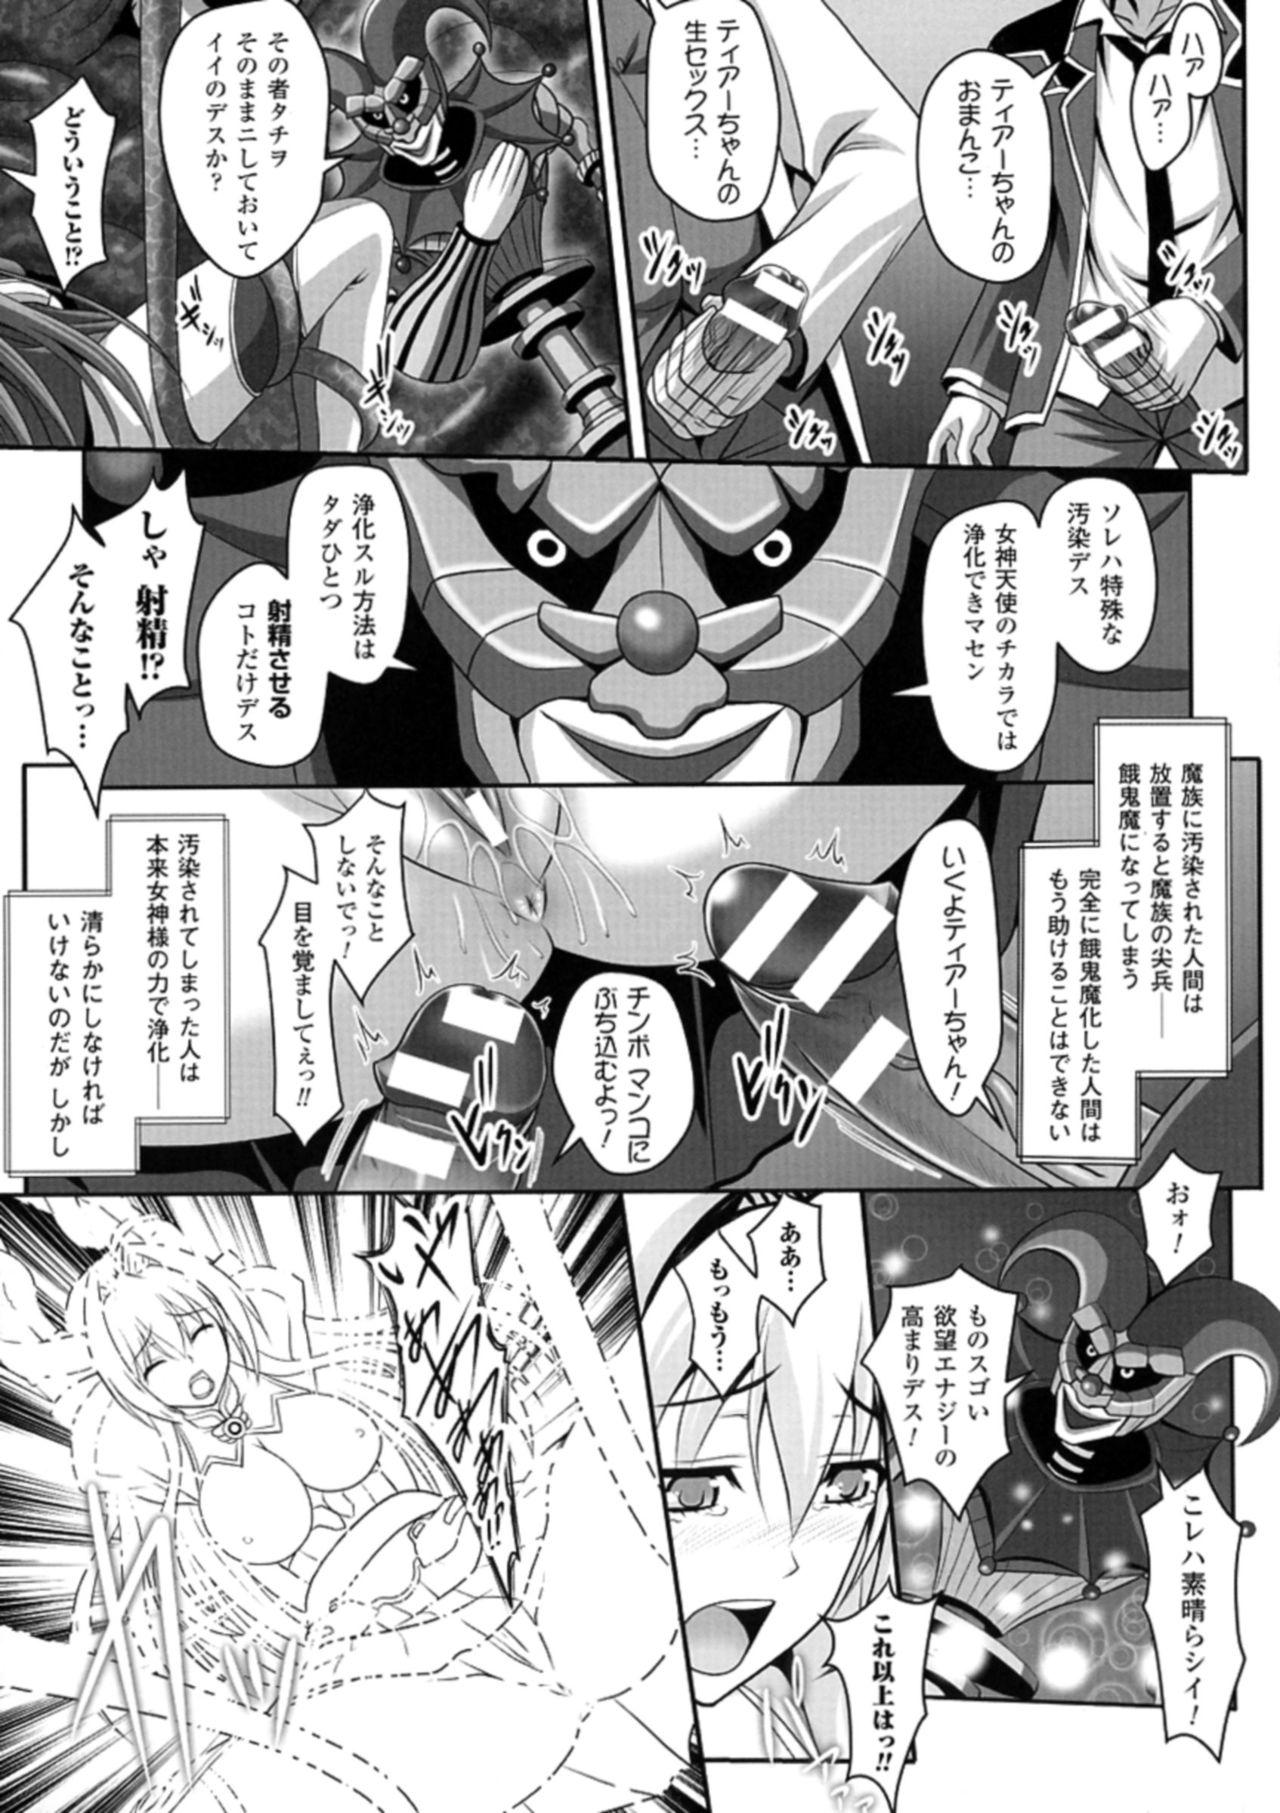 Seigi no Heroine Kangoku File DX Vol. 3 8